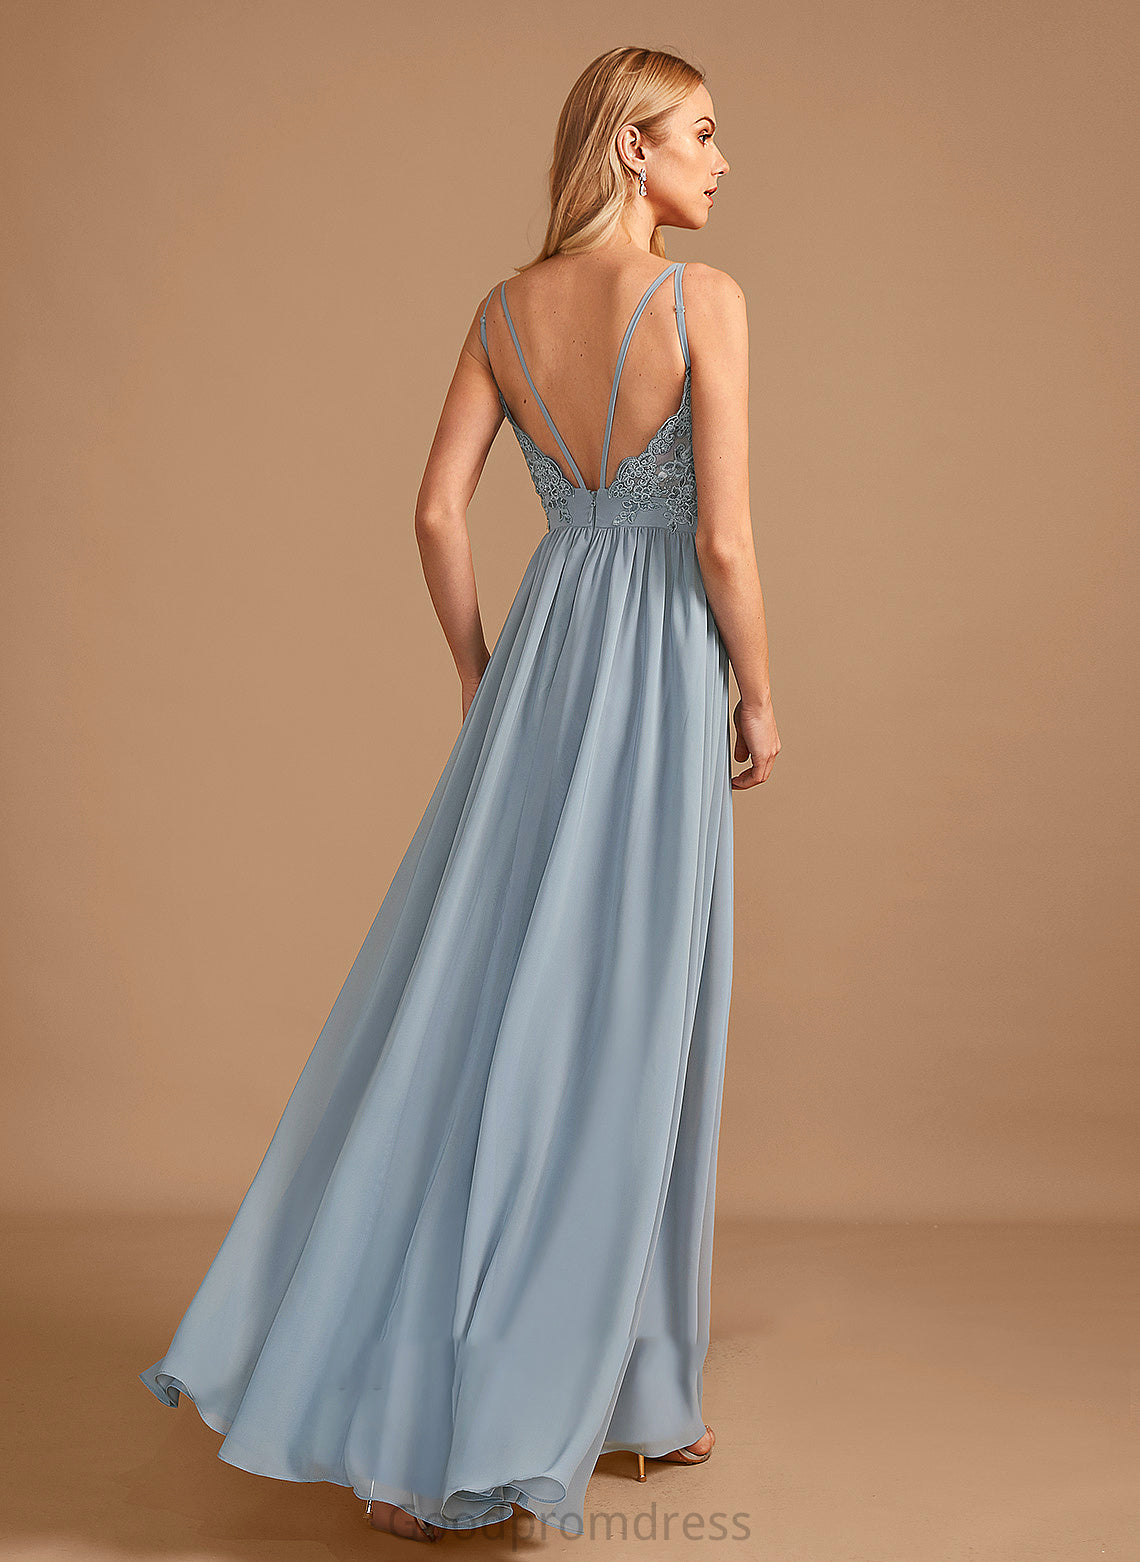 Neckline A-Line Embellishment Length Floor-Length Fabric Silhouette V-neck Ruffle Maribel V-Neck Floor Length Bridesmaid Dresses